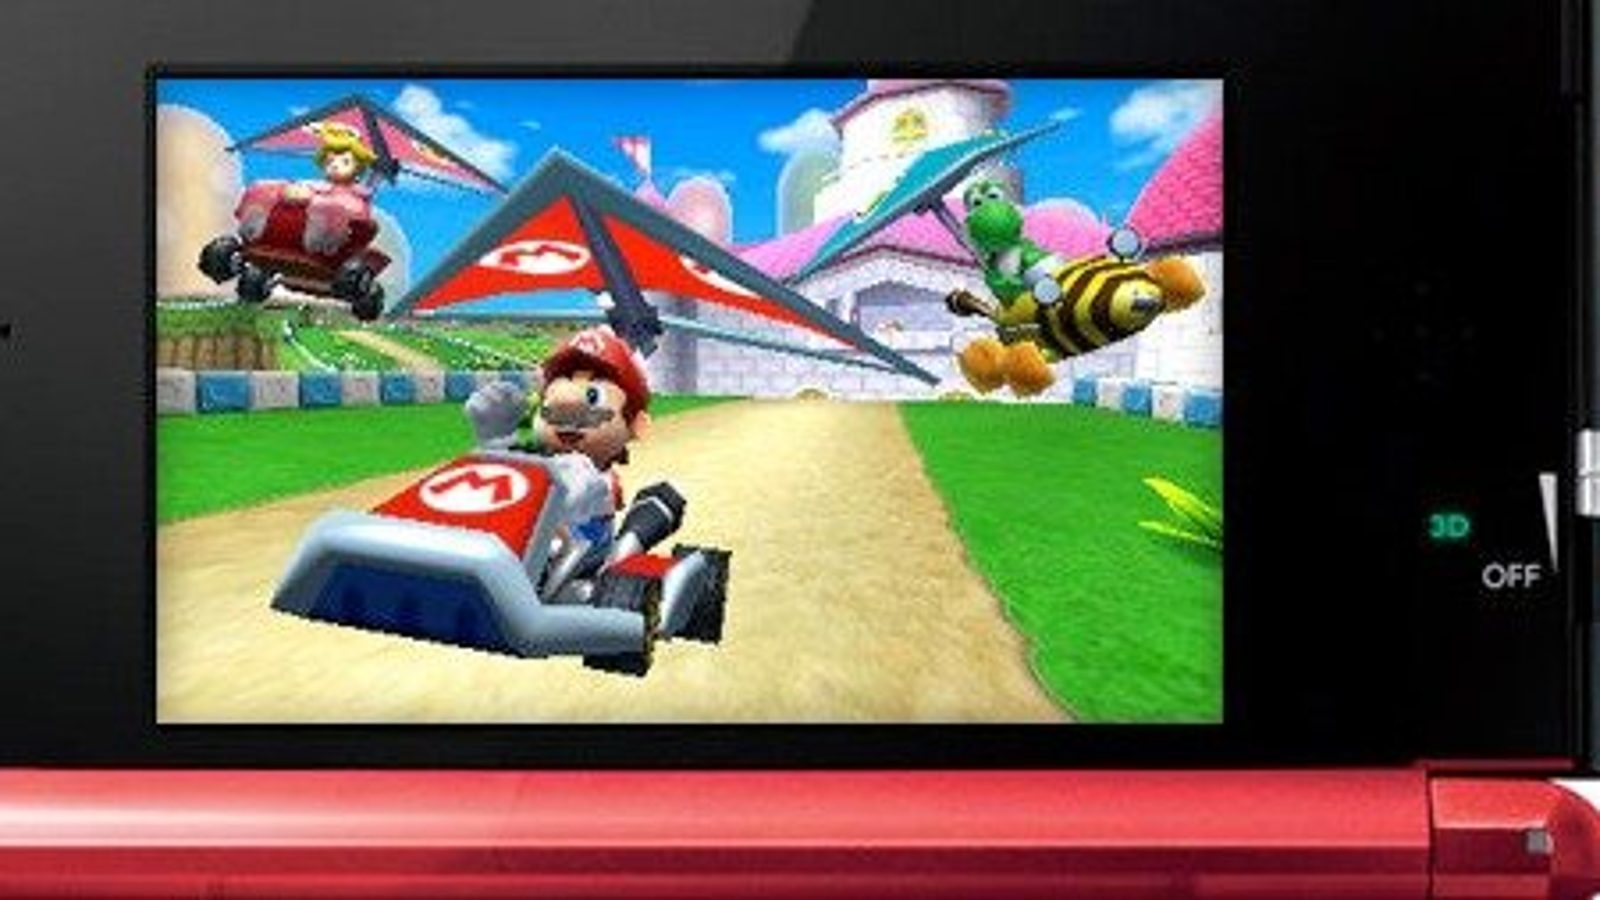 Mario community 7 features Kart